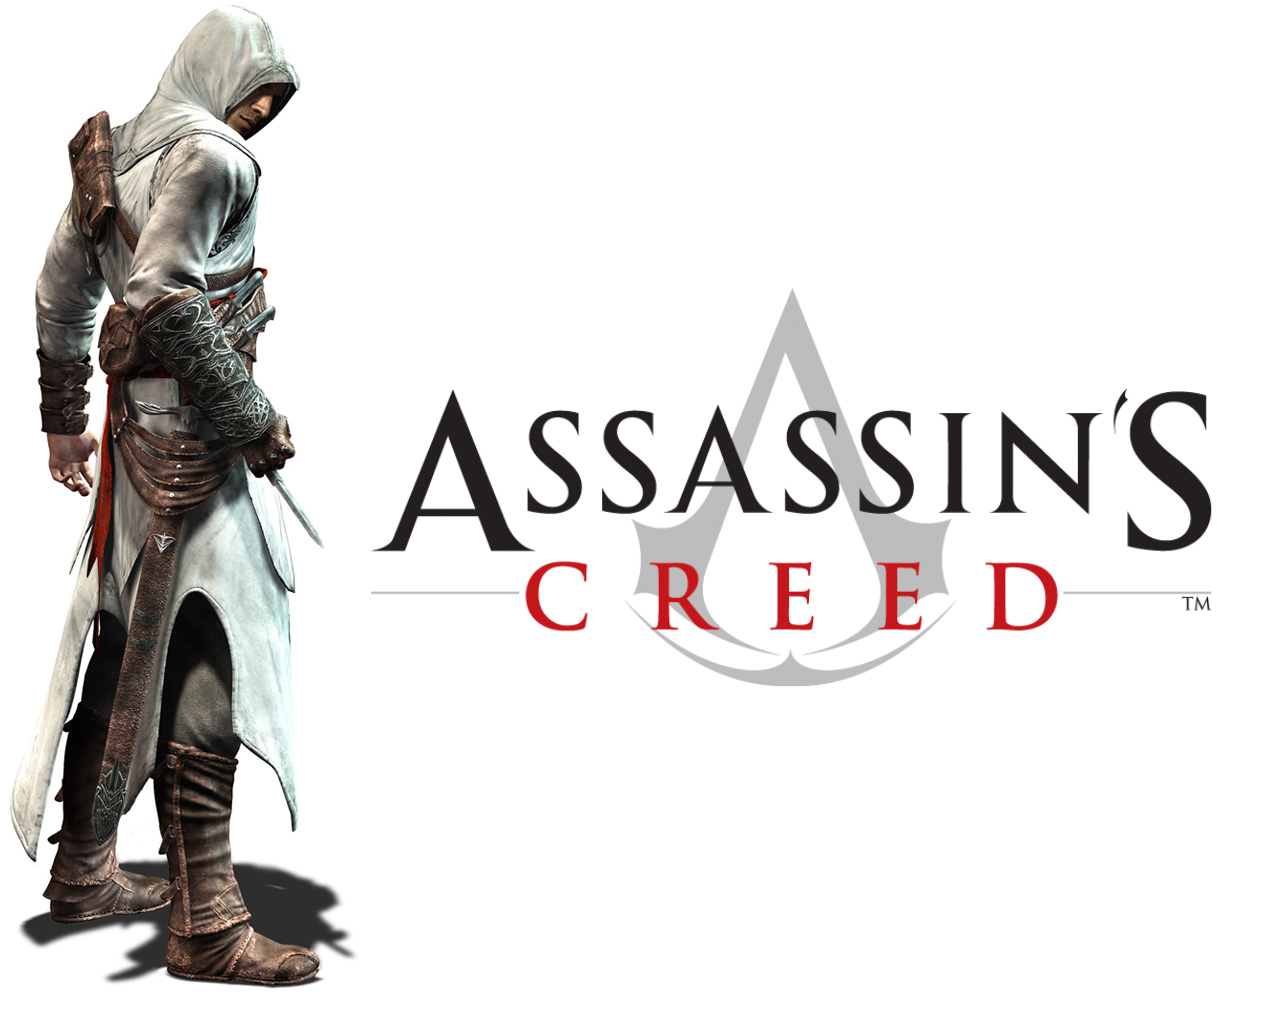 Assassin's Creed Brotherhood - Parte 2: Roma Sitiada